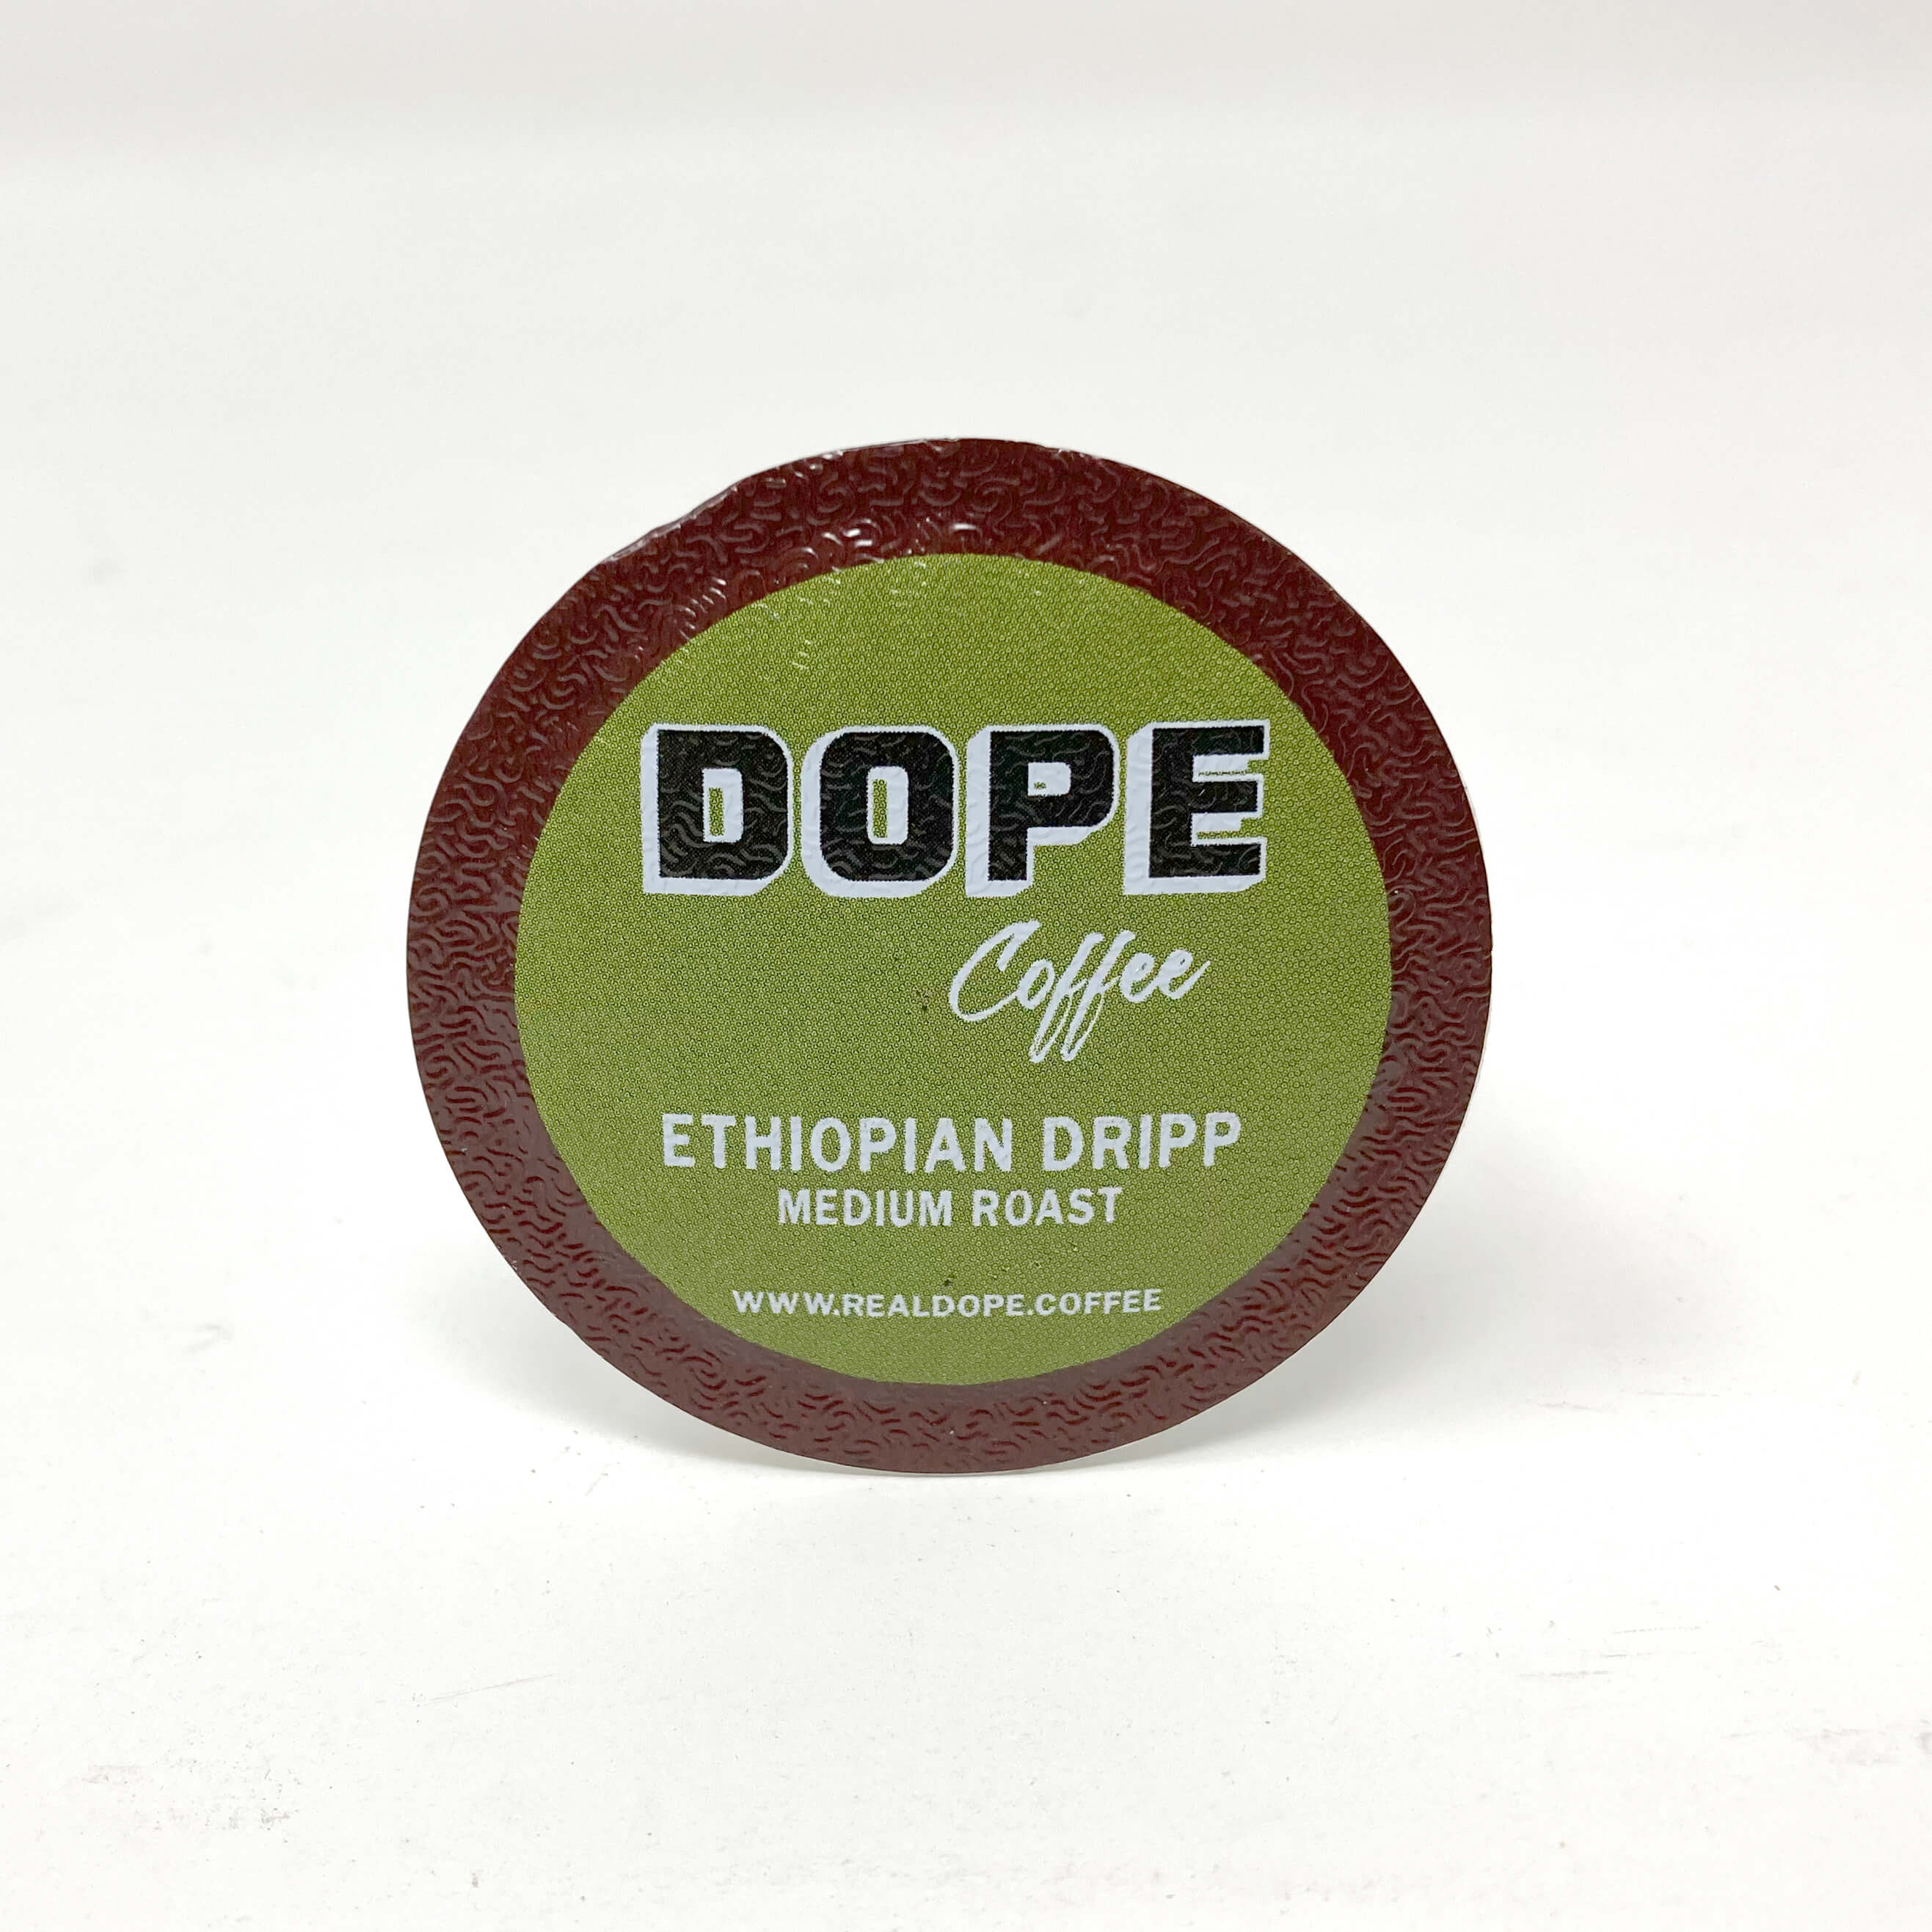 Ethiopian Dripp Coffee Pods Subscription